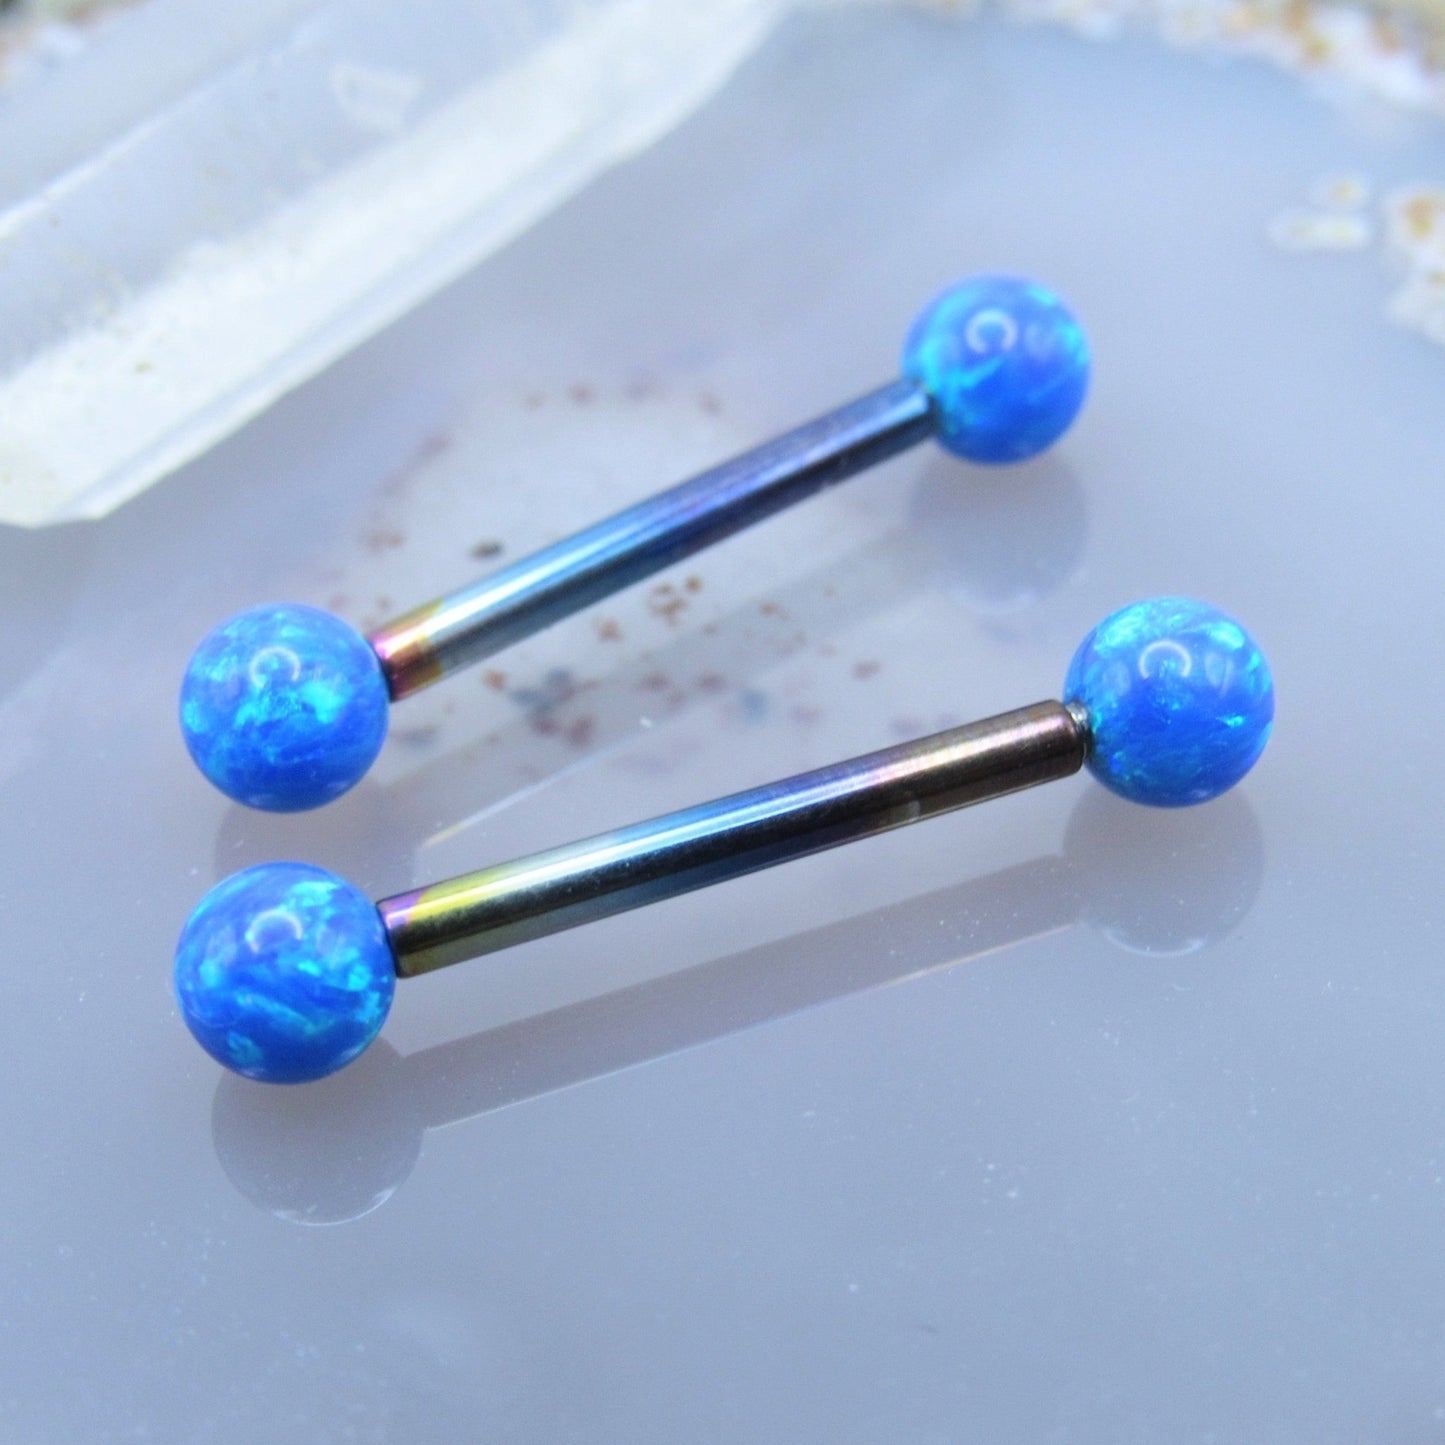 Titanium opal nipple piercing jewelry 14g-12g 4mm blue opal barbell set internally threaded pair - Siren Body Jewelry